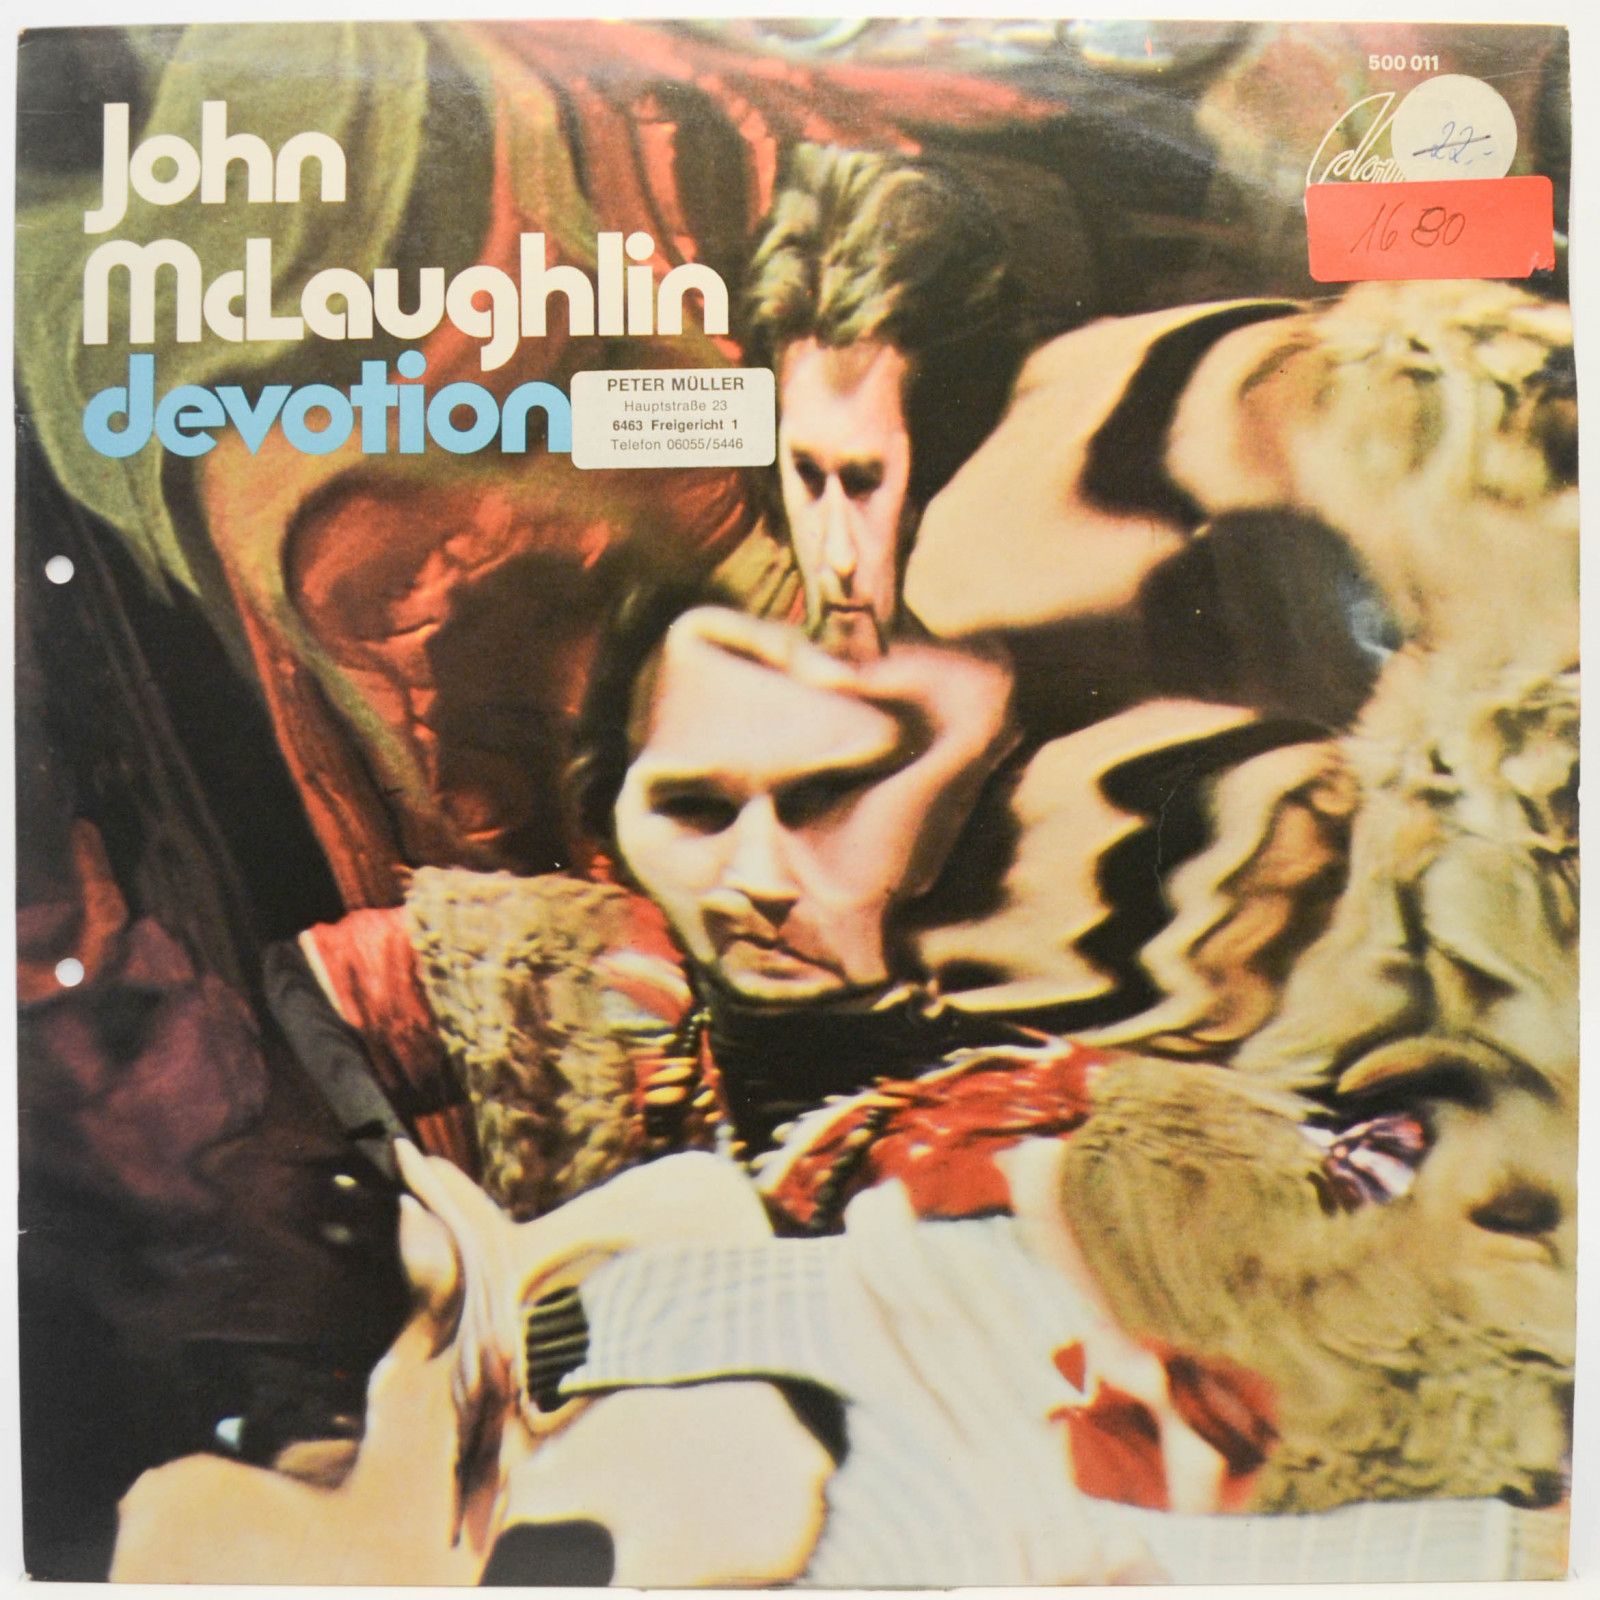 John McLaughlin — Devotion, 1970